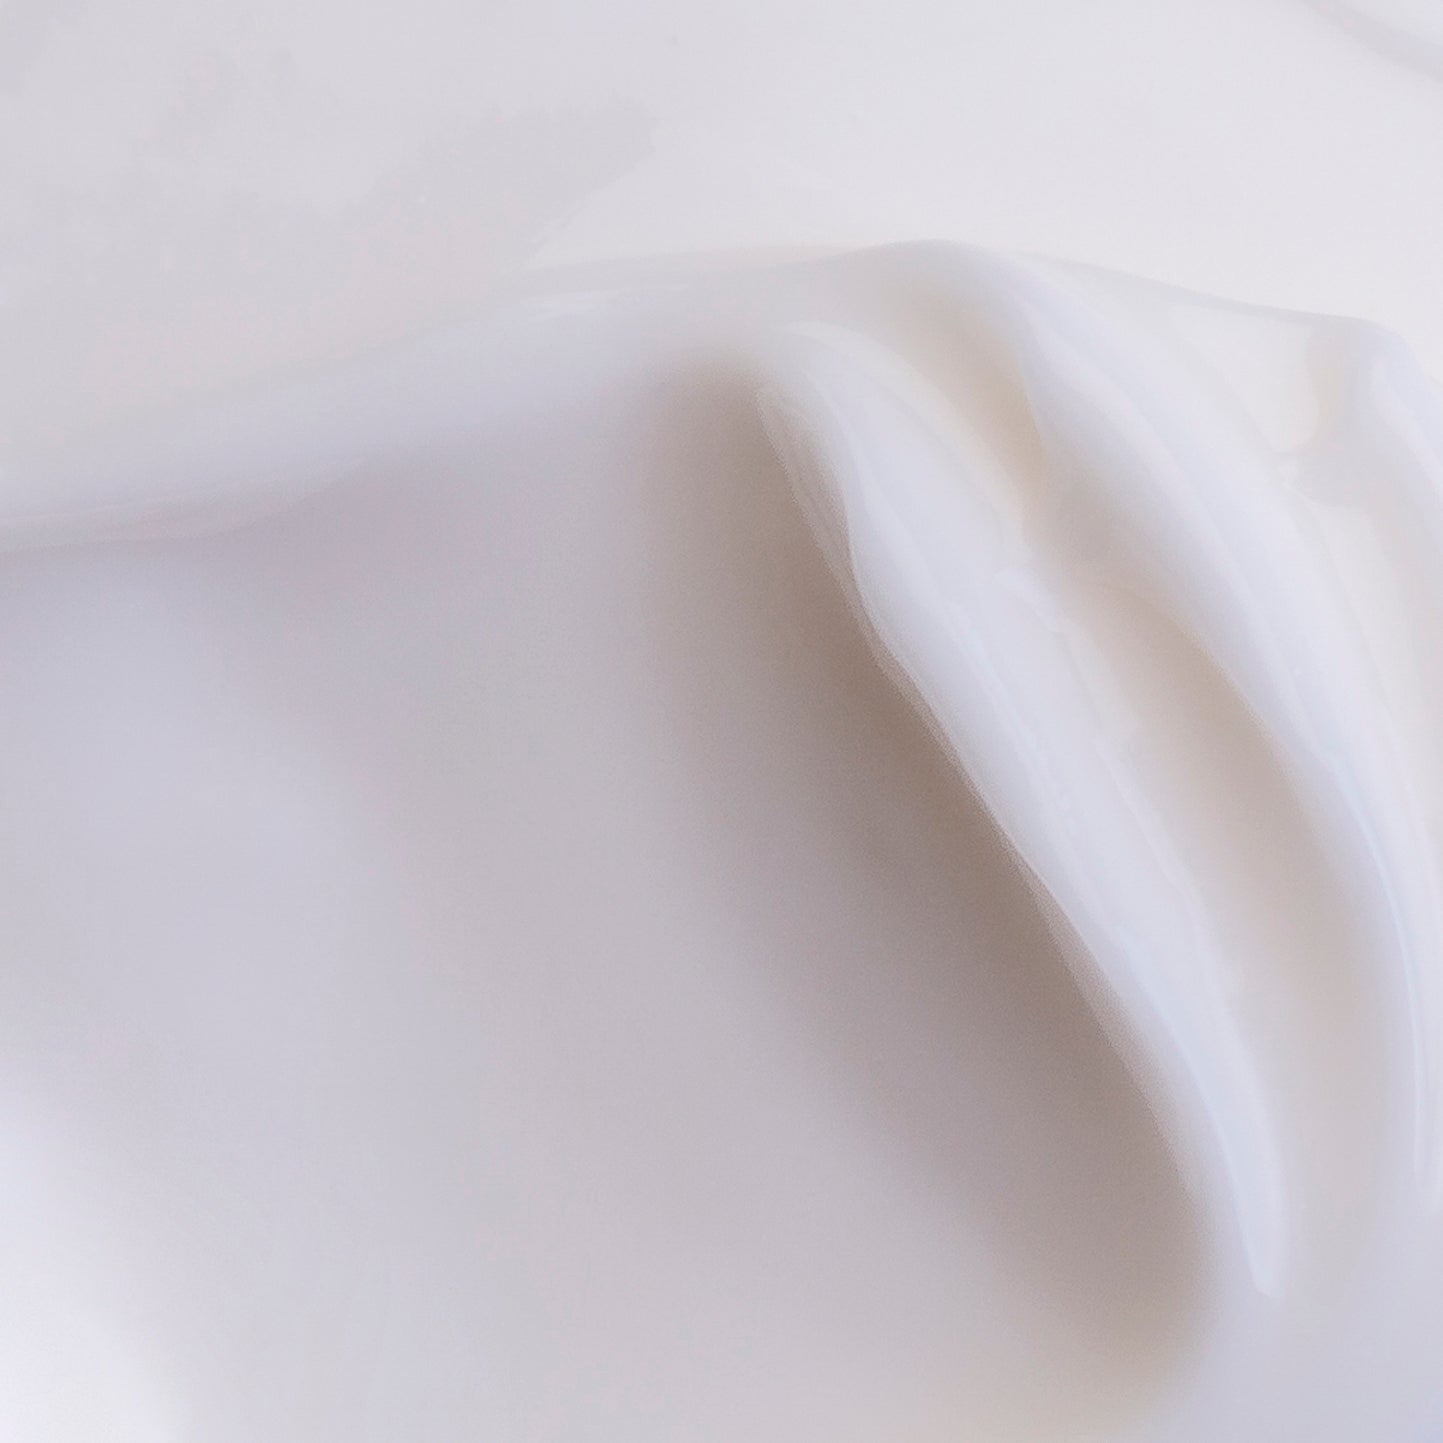 FILORGA HYDRA-FILLER MAT white cream smear showing rich texture